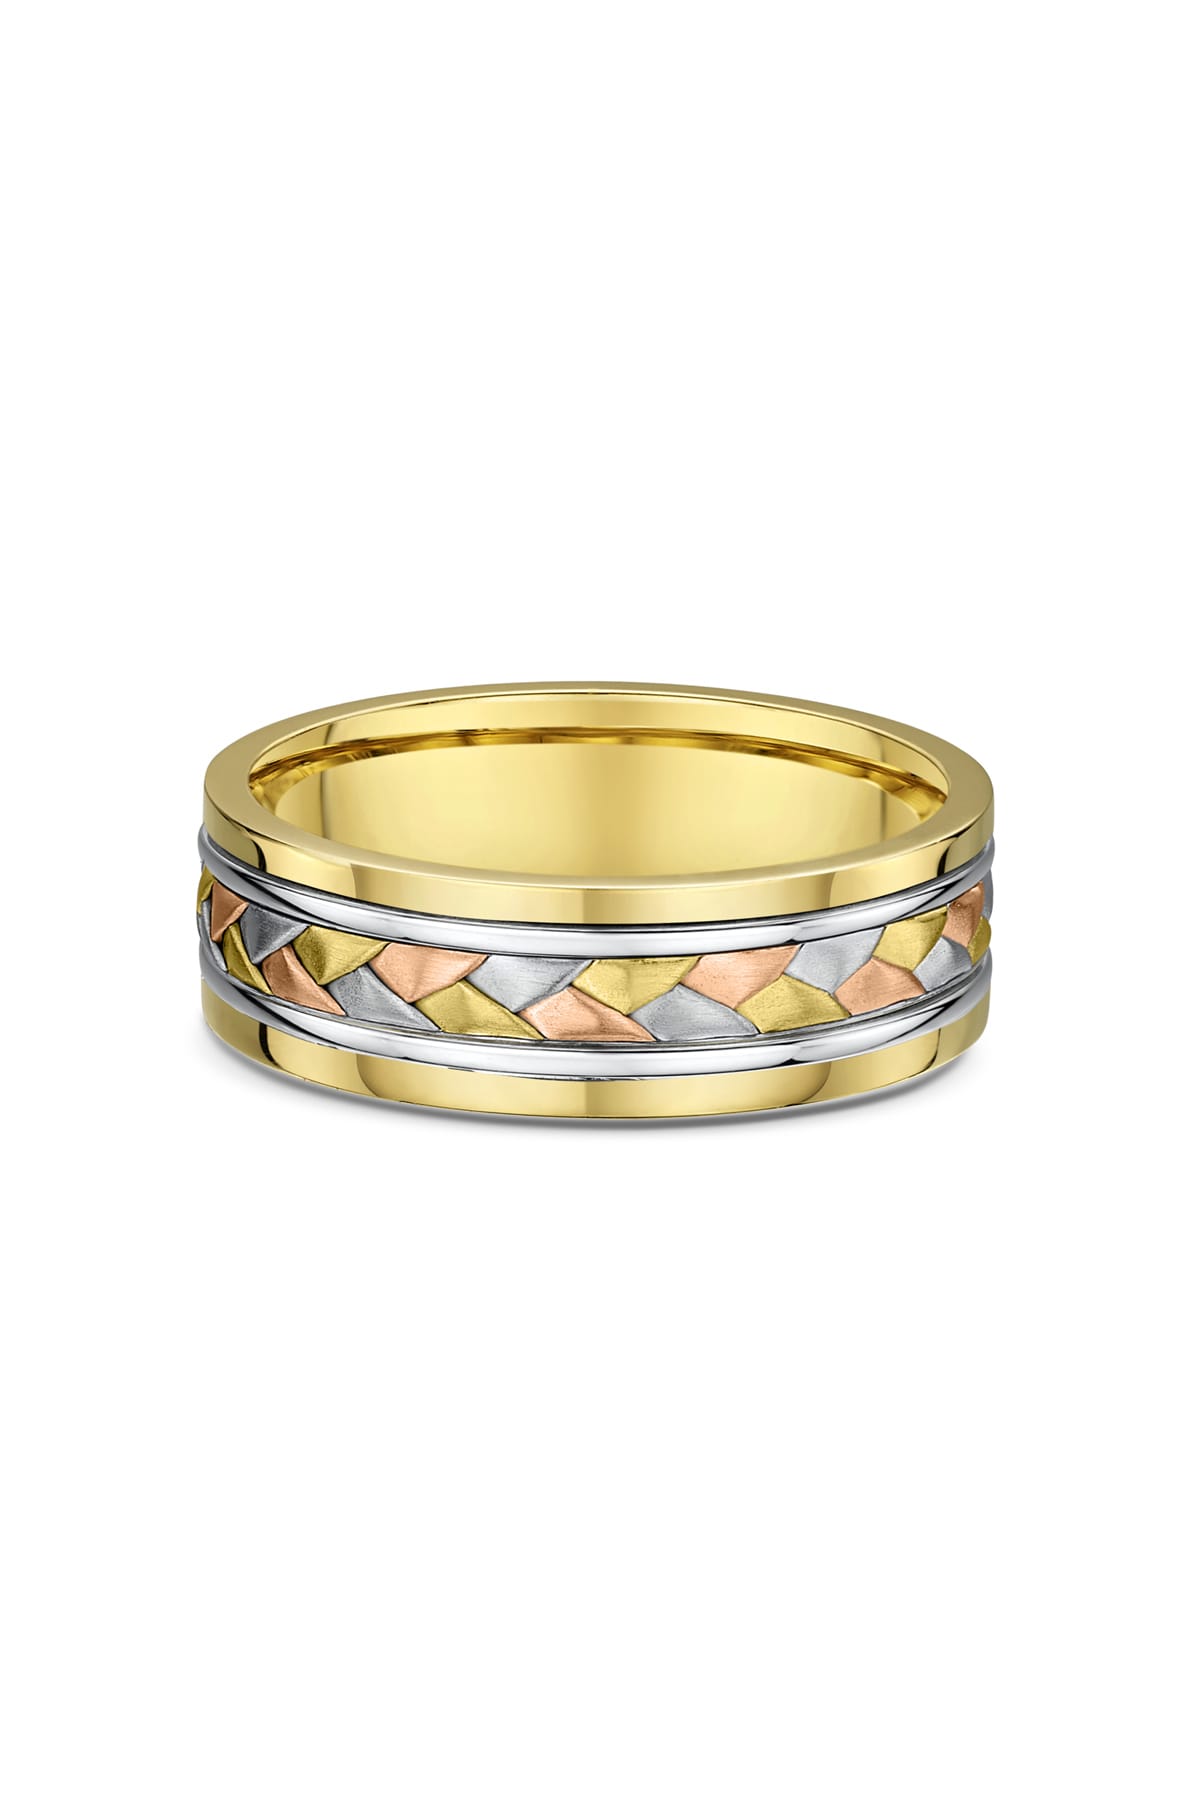 Men's Wedding Ring 1010 available at LeGassick Diamonds and Jewellery Gold Coast, Australia.